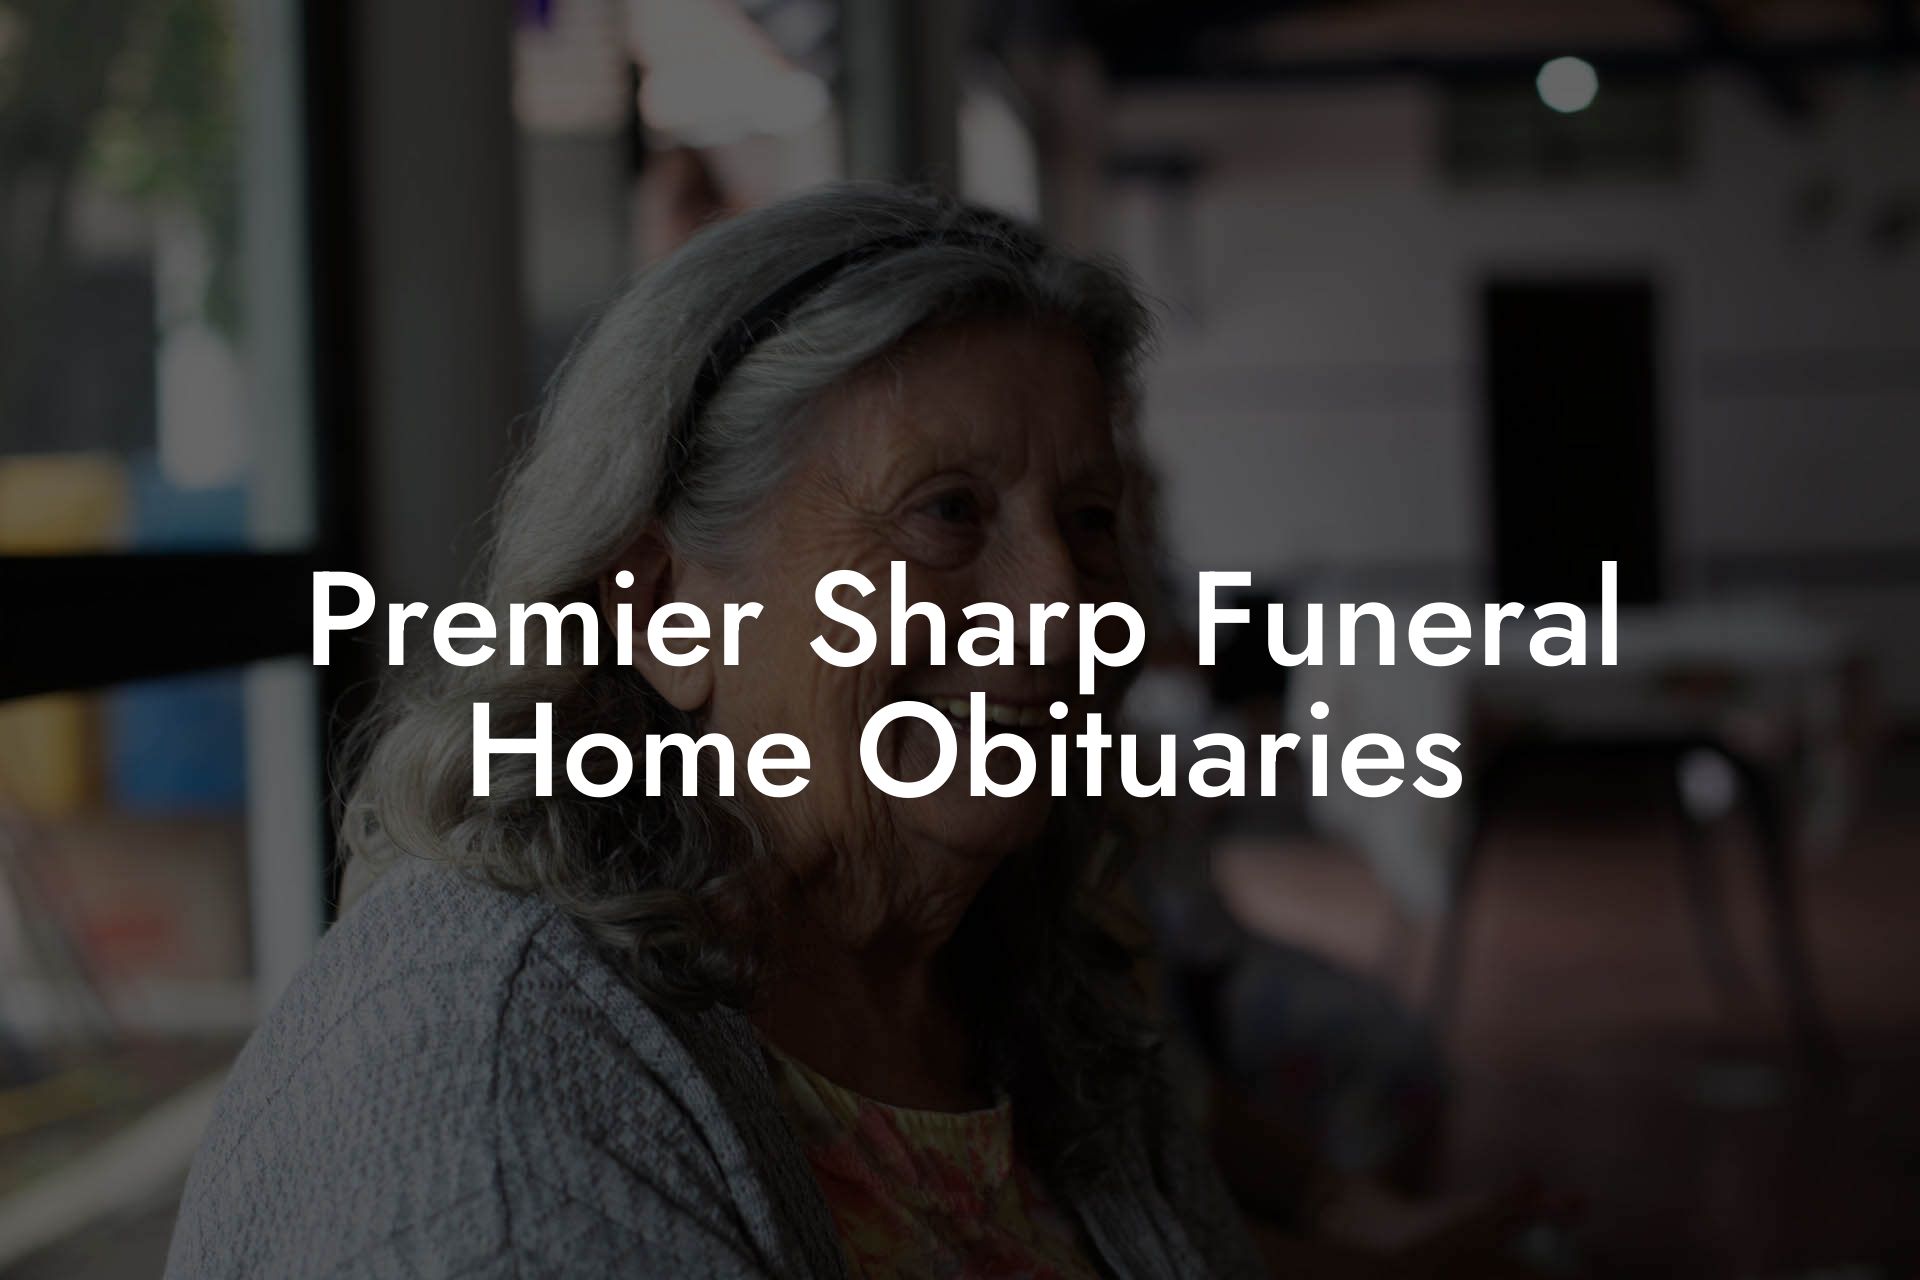 Premier Sharp Funeral Home Obituaries